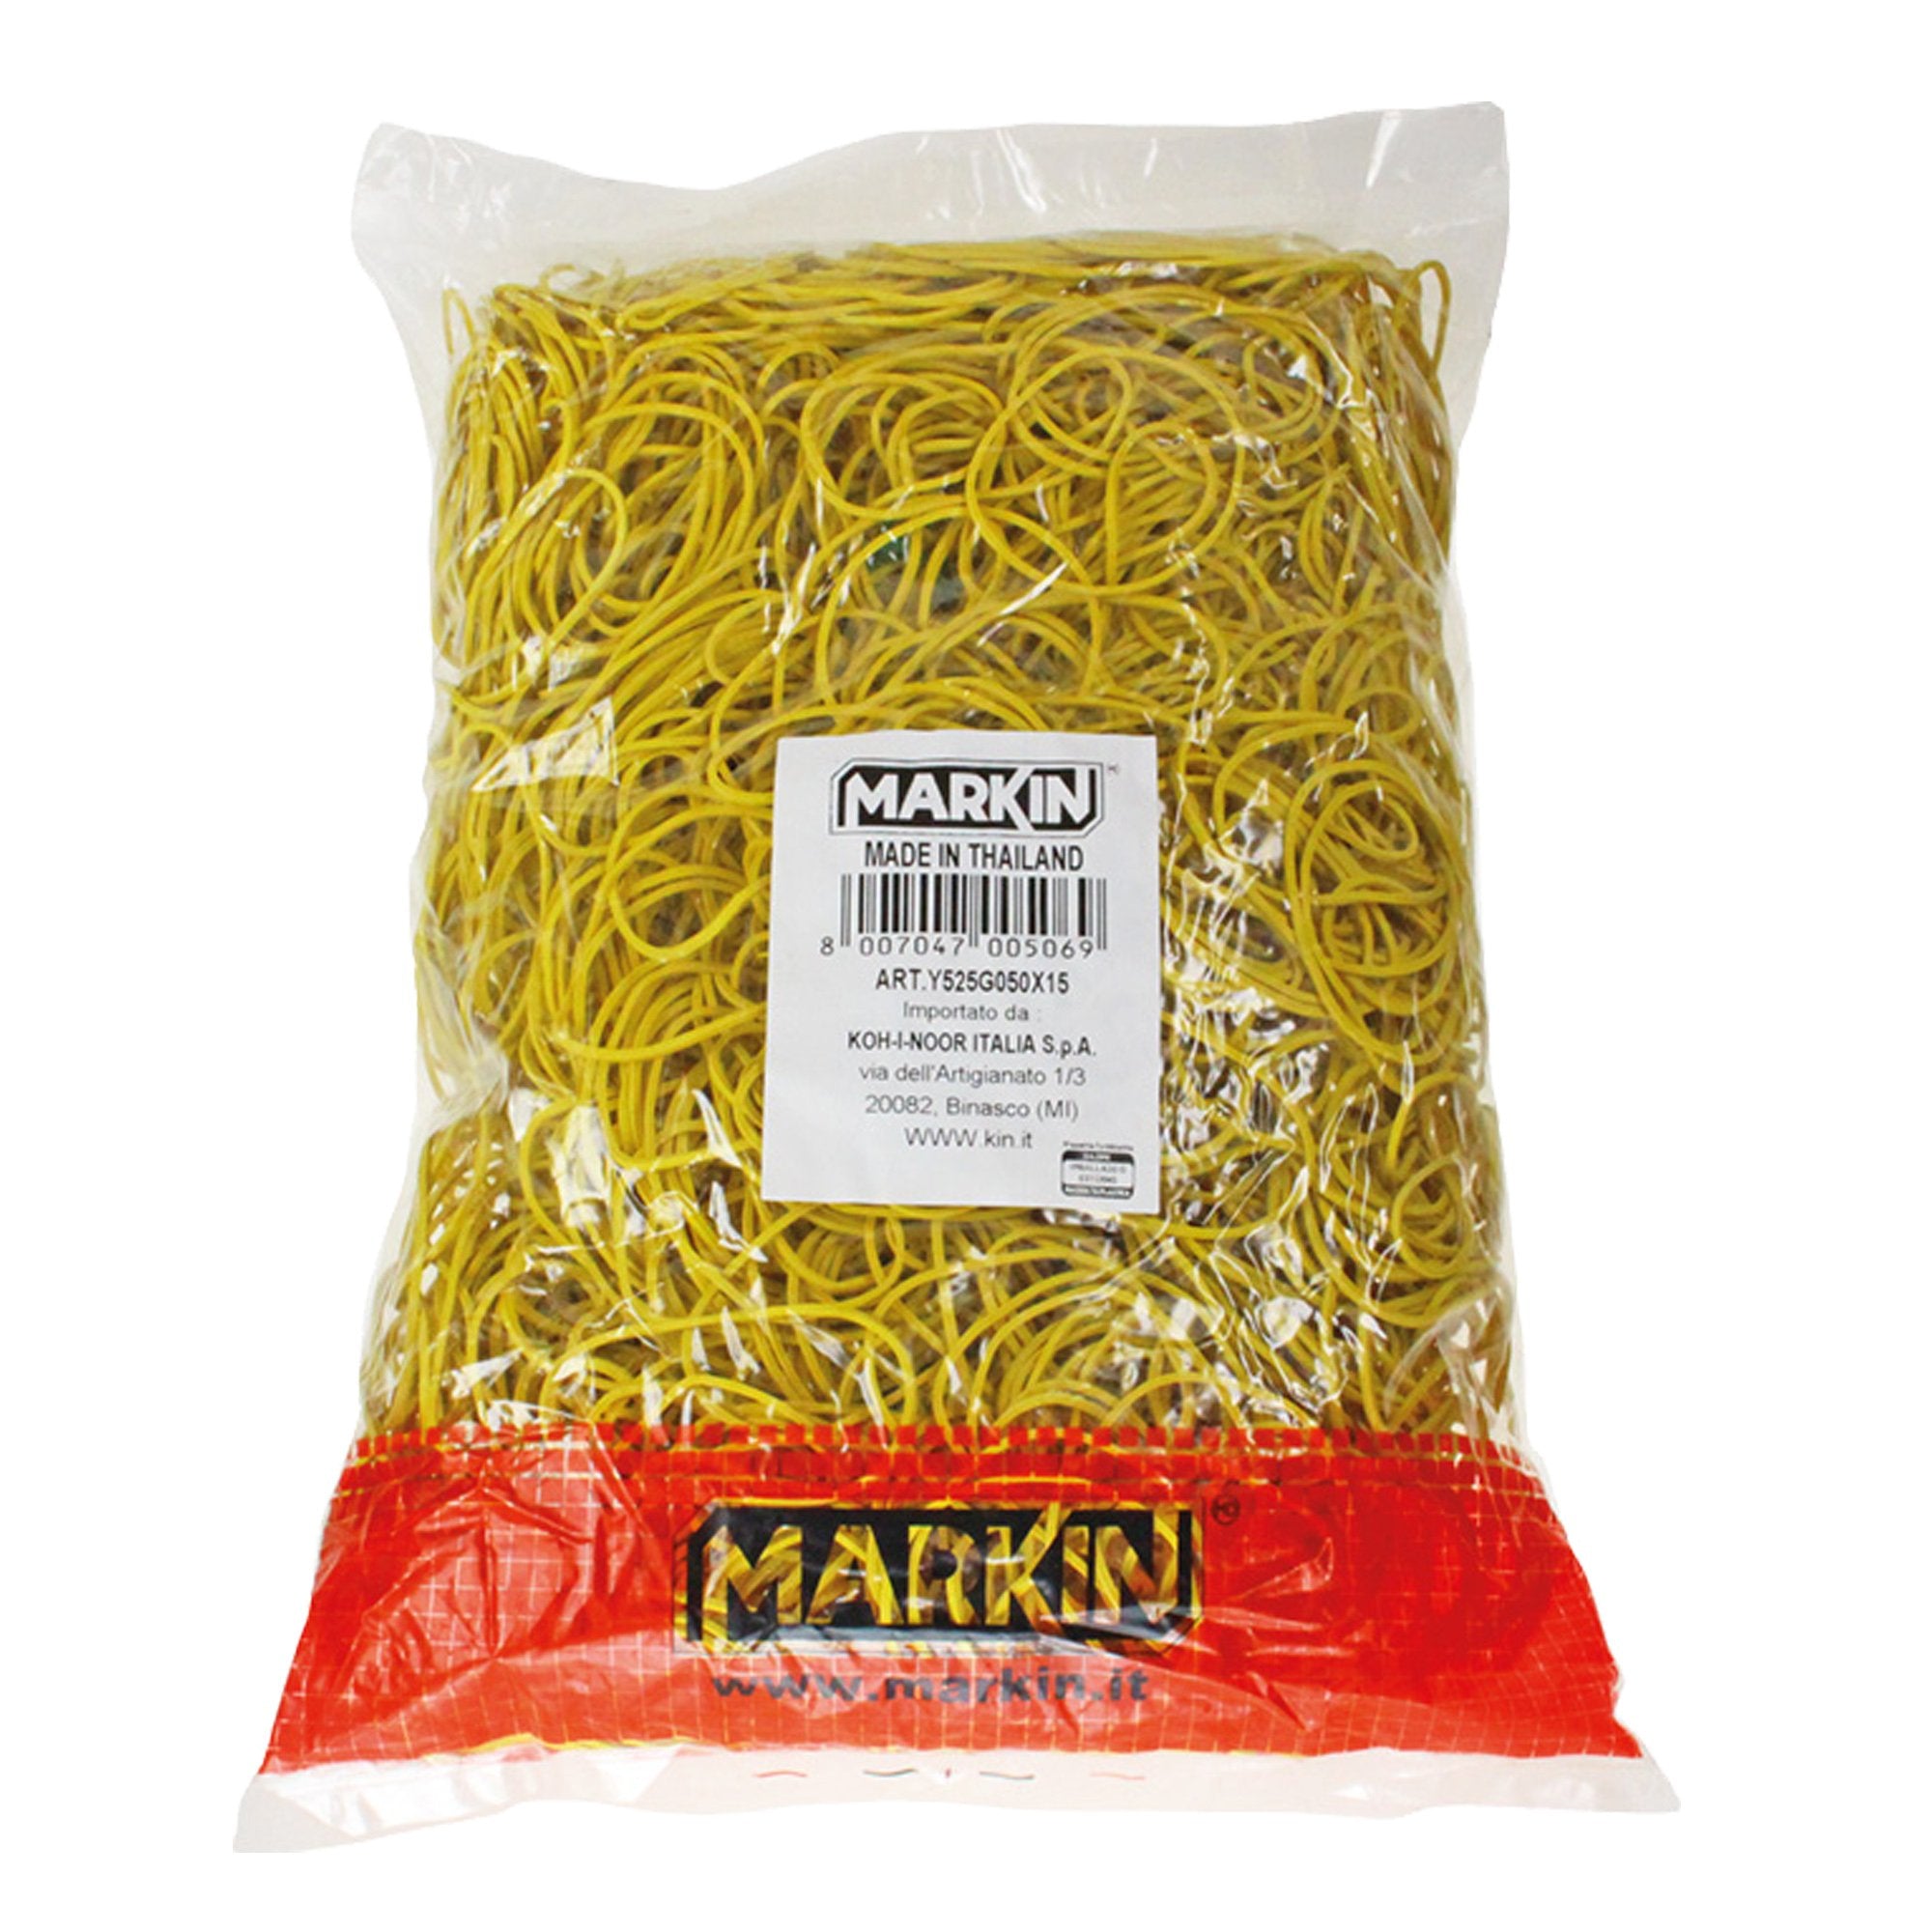 markin-elastico-gomma-giallo-d150-sacco-1kg